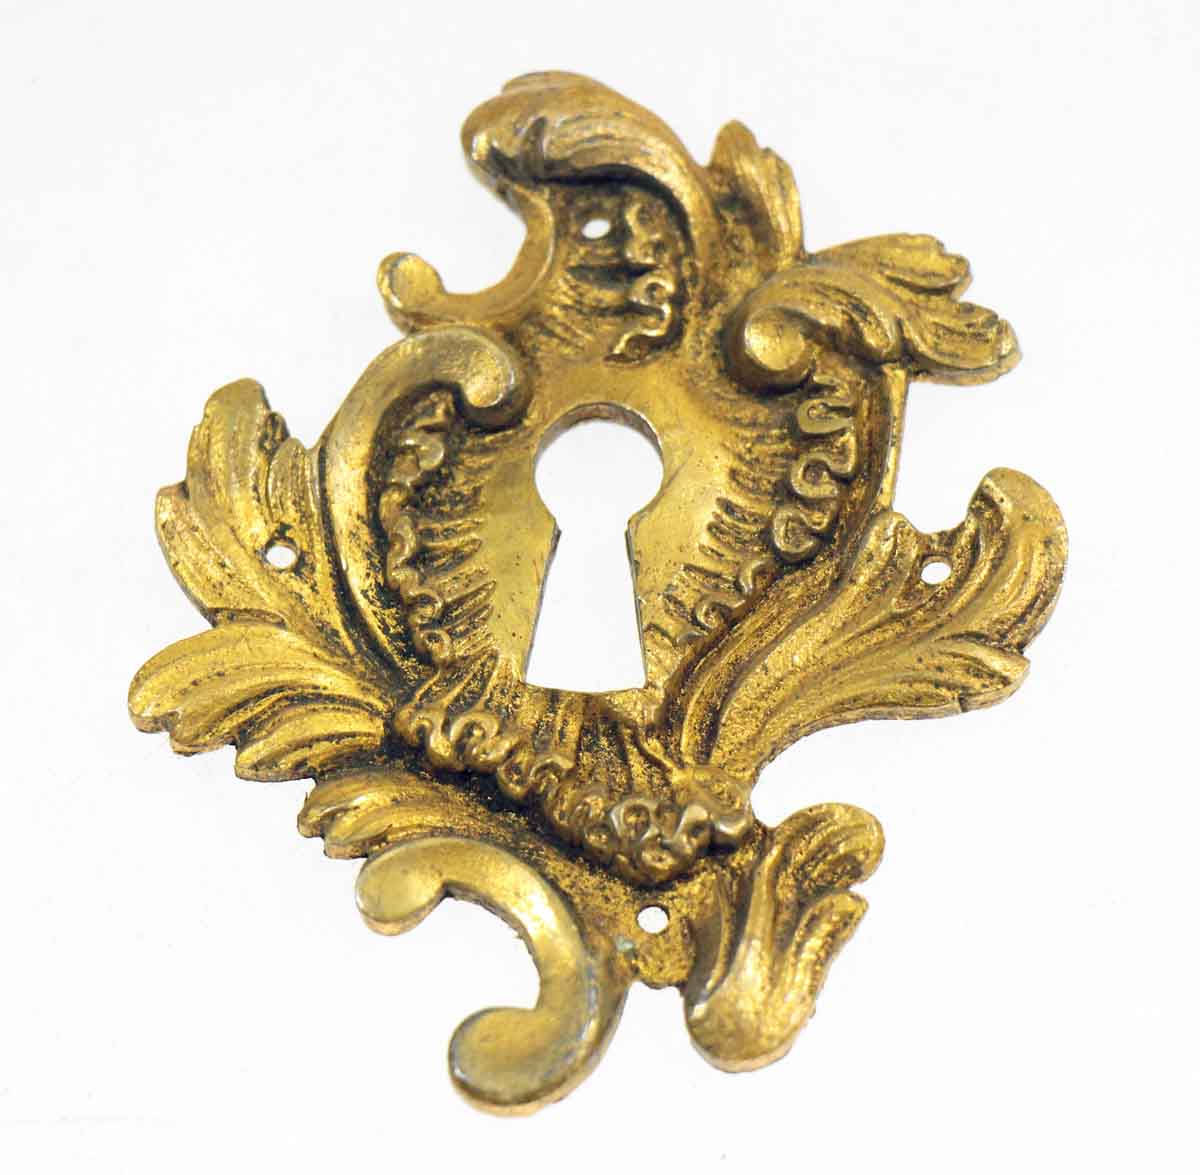 Ornate Gilded Keyhole Cover